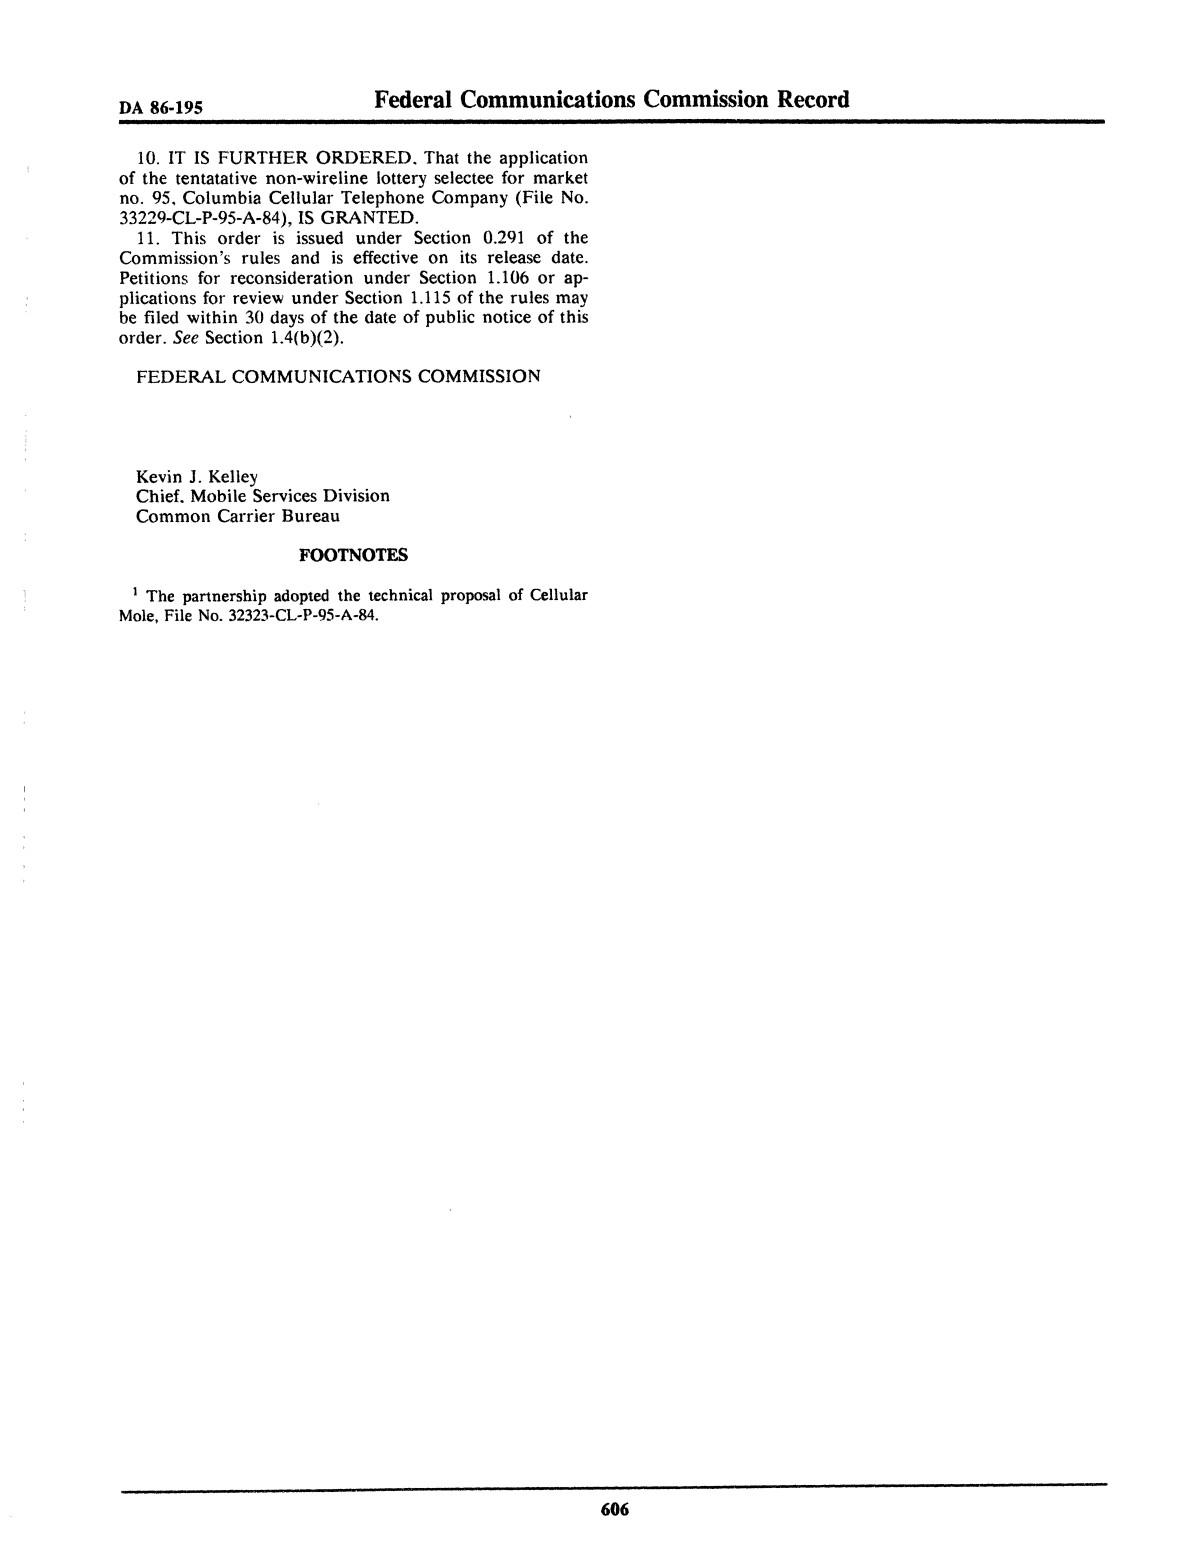 FCC Record, Volume 1, No. 4, Pages 549 to 785, November 10 - November 21, 1986
                                                
                                                    606
                                                